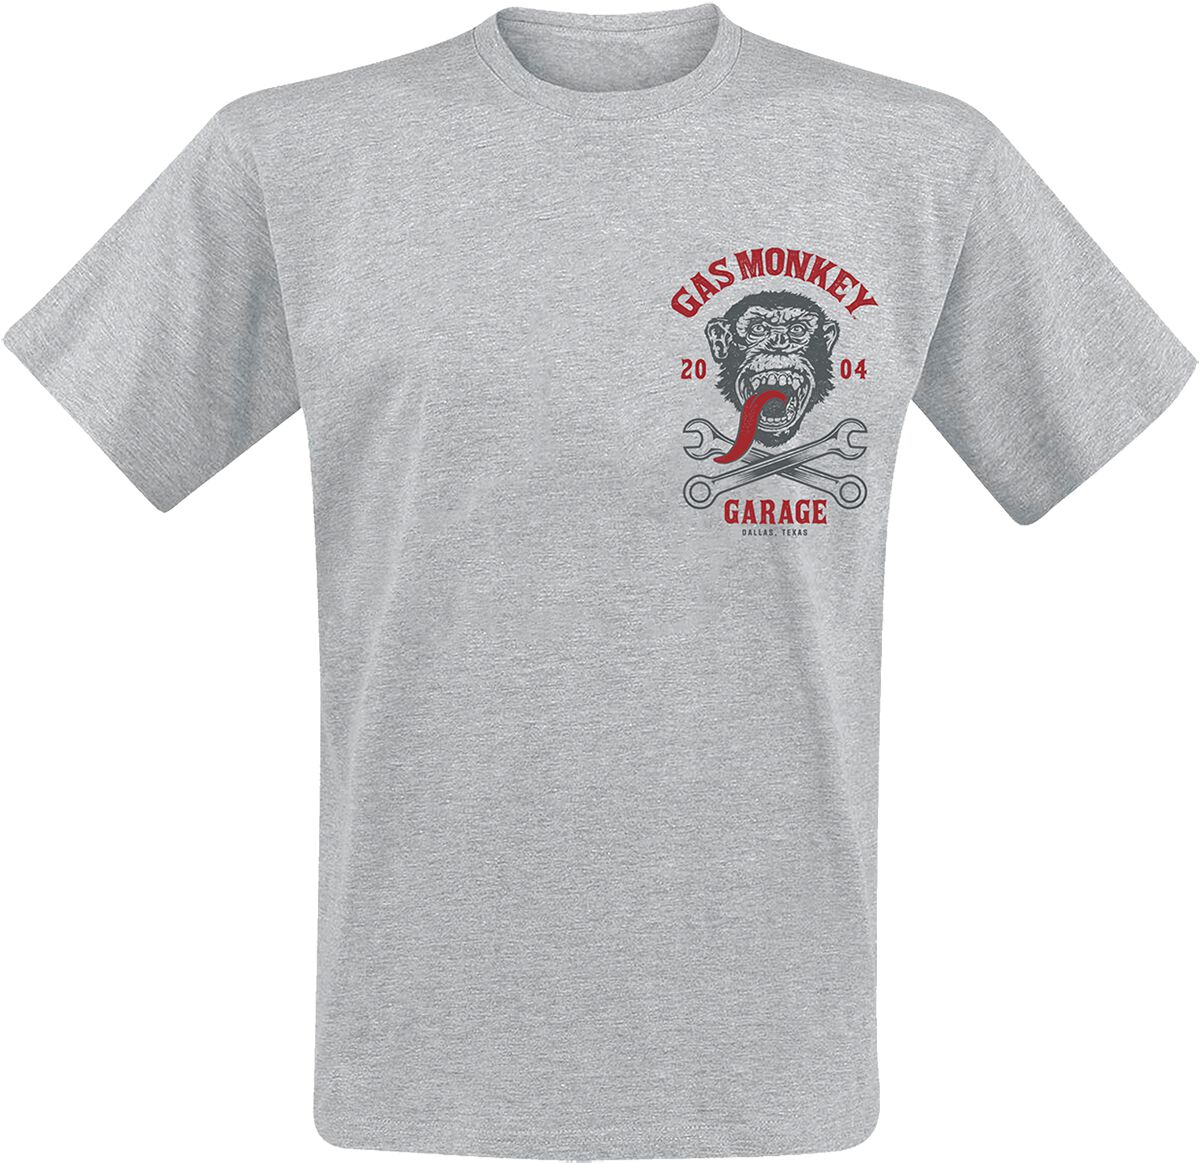 Gas Monkey Garage Spanners 2004 T-Shirt grau in XXL